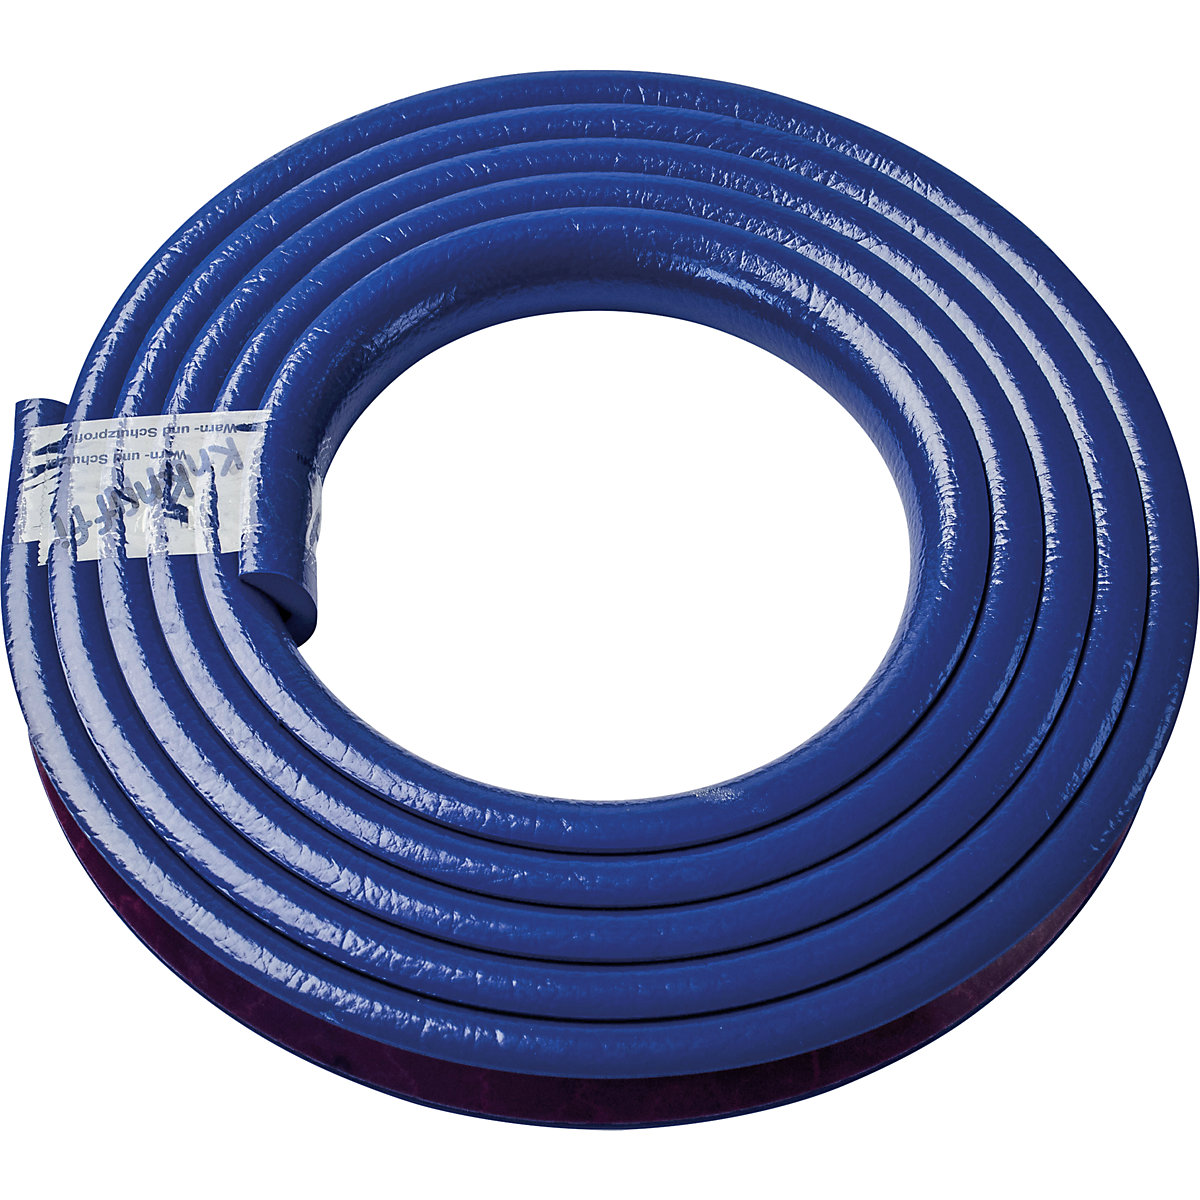 Zaščita vogalov Knuffi® – SHG, tip A, 1 rola po 5 m, modre barve-25